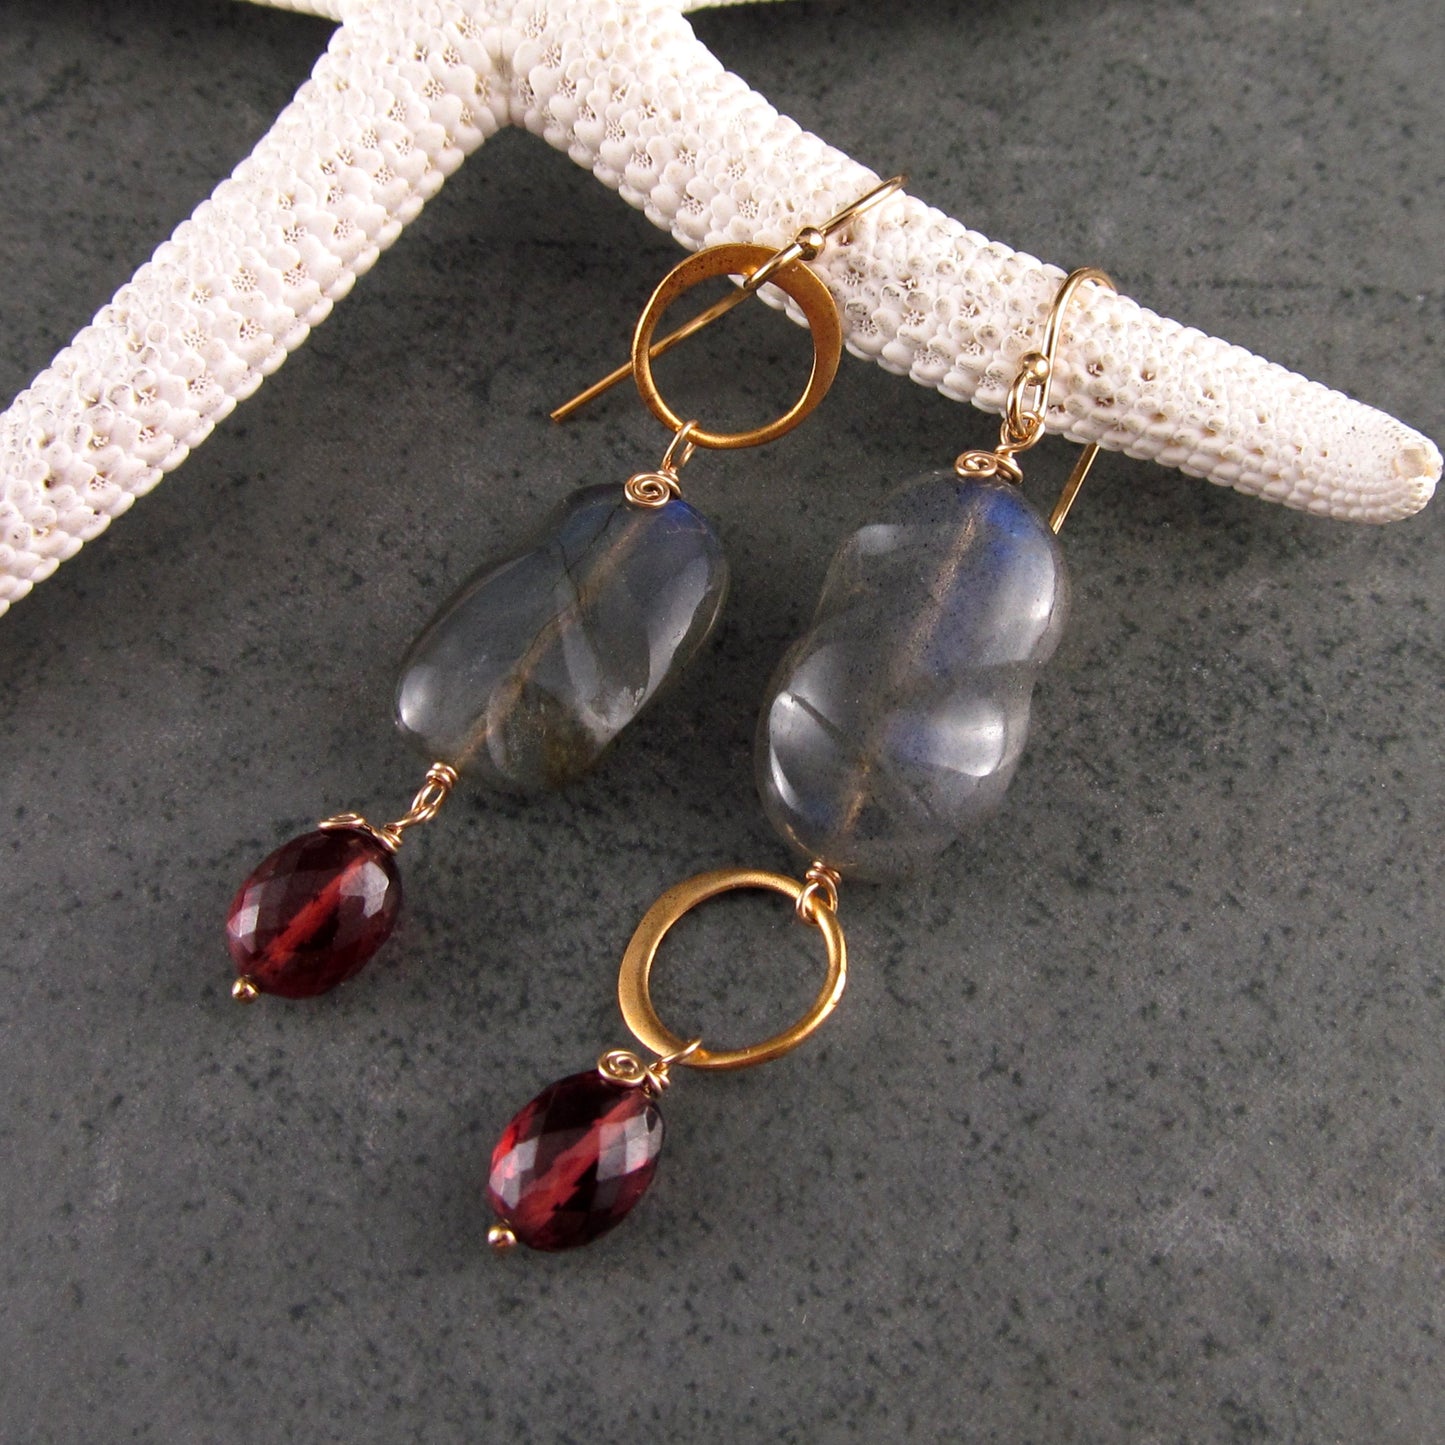 Blue labradorite earrings with garnet in 14k gold fill, mis matched earrings